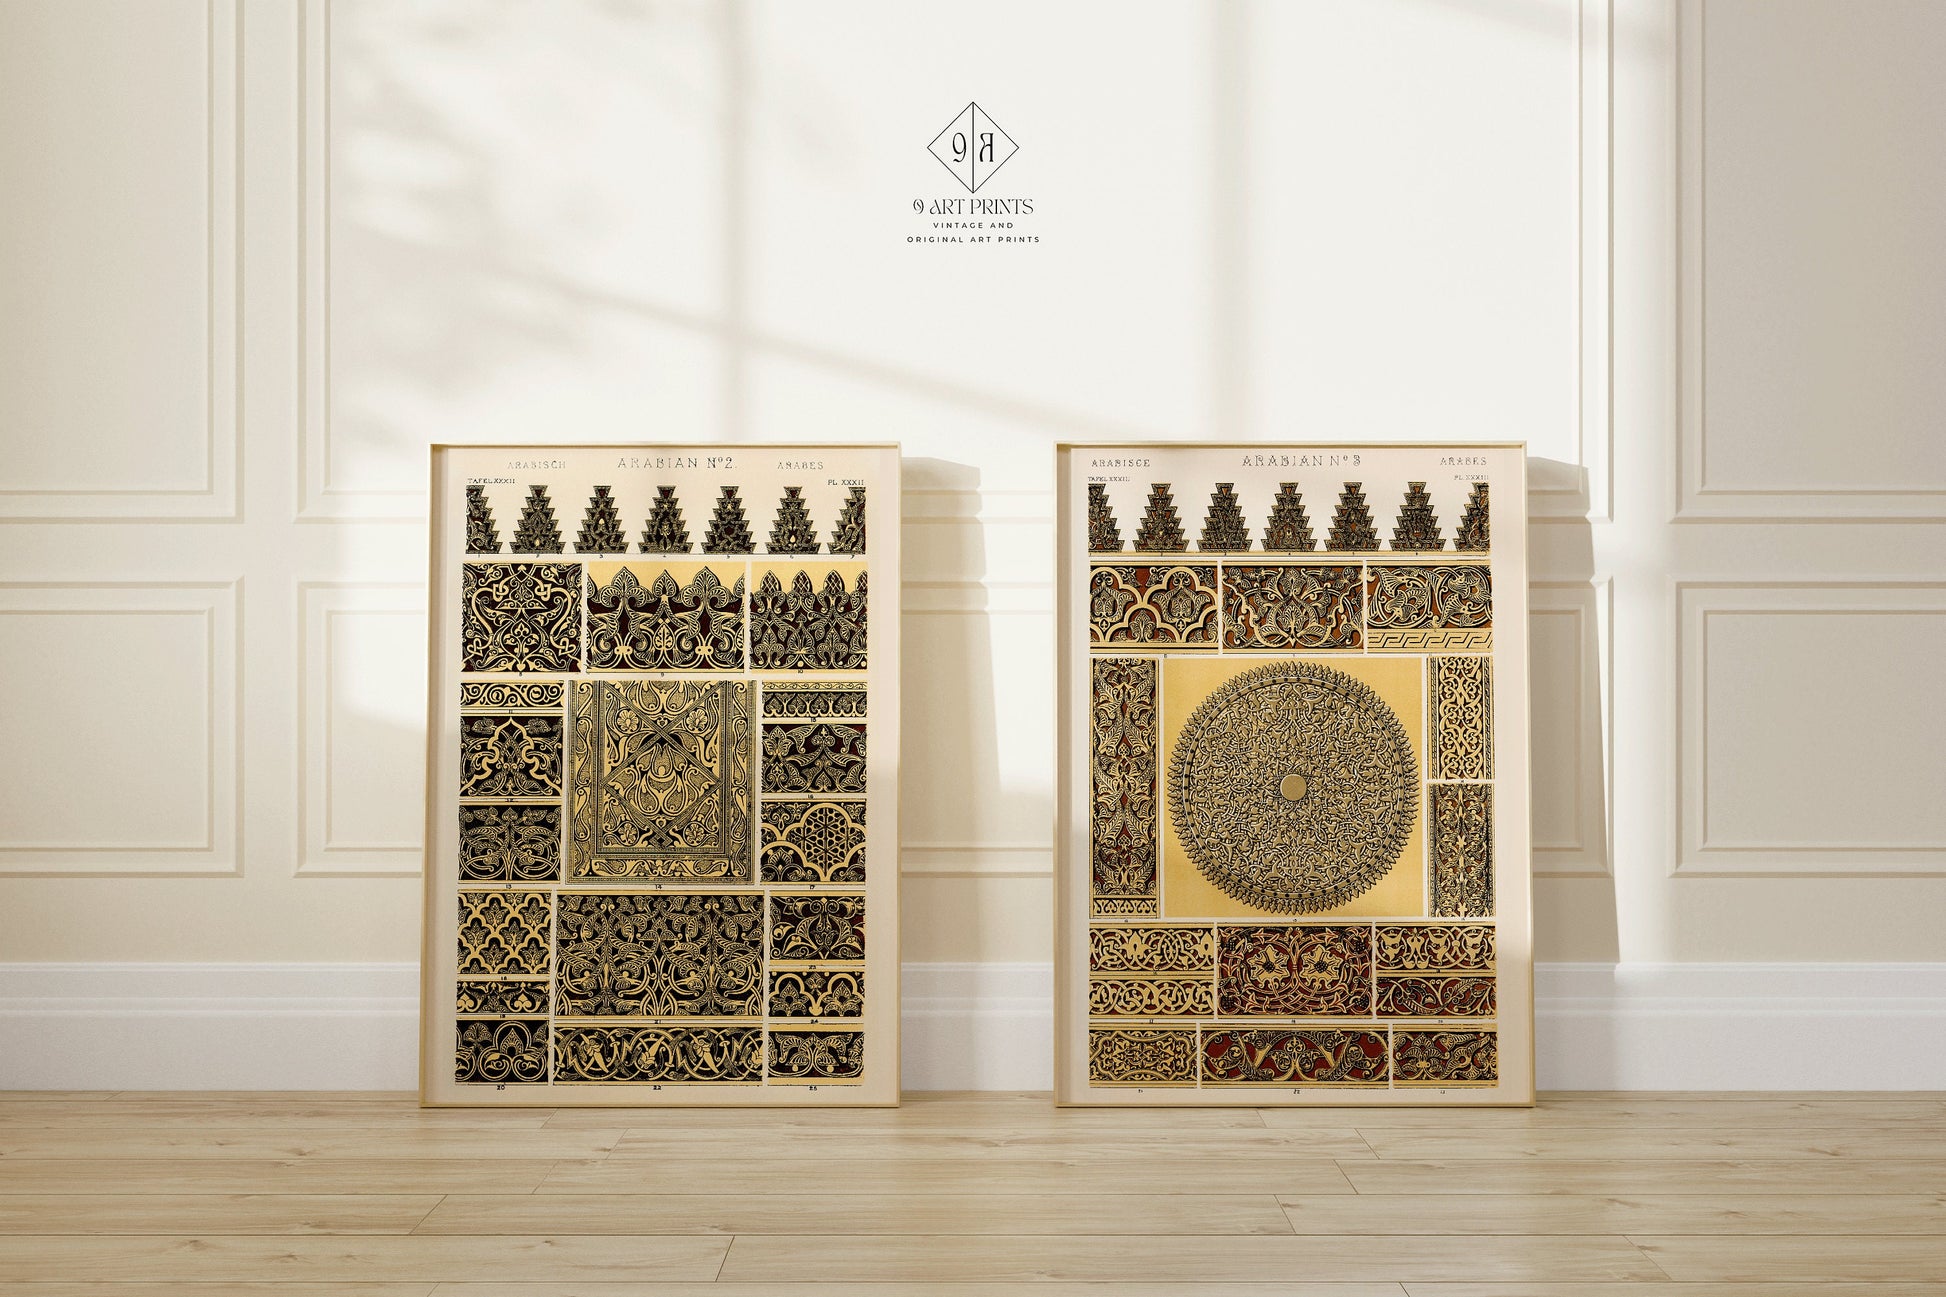 Set of 2 OWEN JONES ARABIAN prints Museum Exhibition Poster Vintage Pattern Framed Ready to Hang Home Office Decor Housewarming Gift Idea